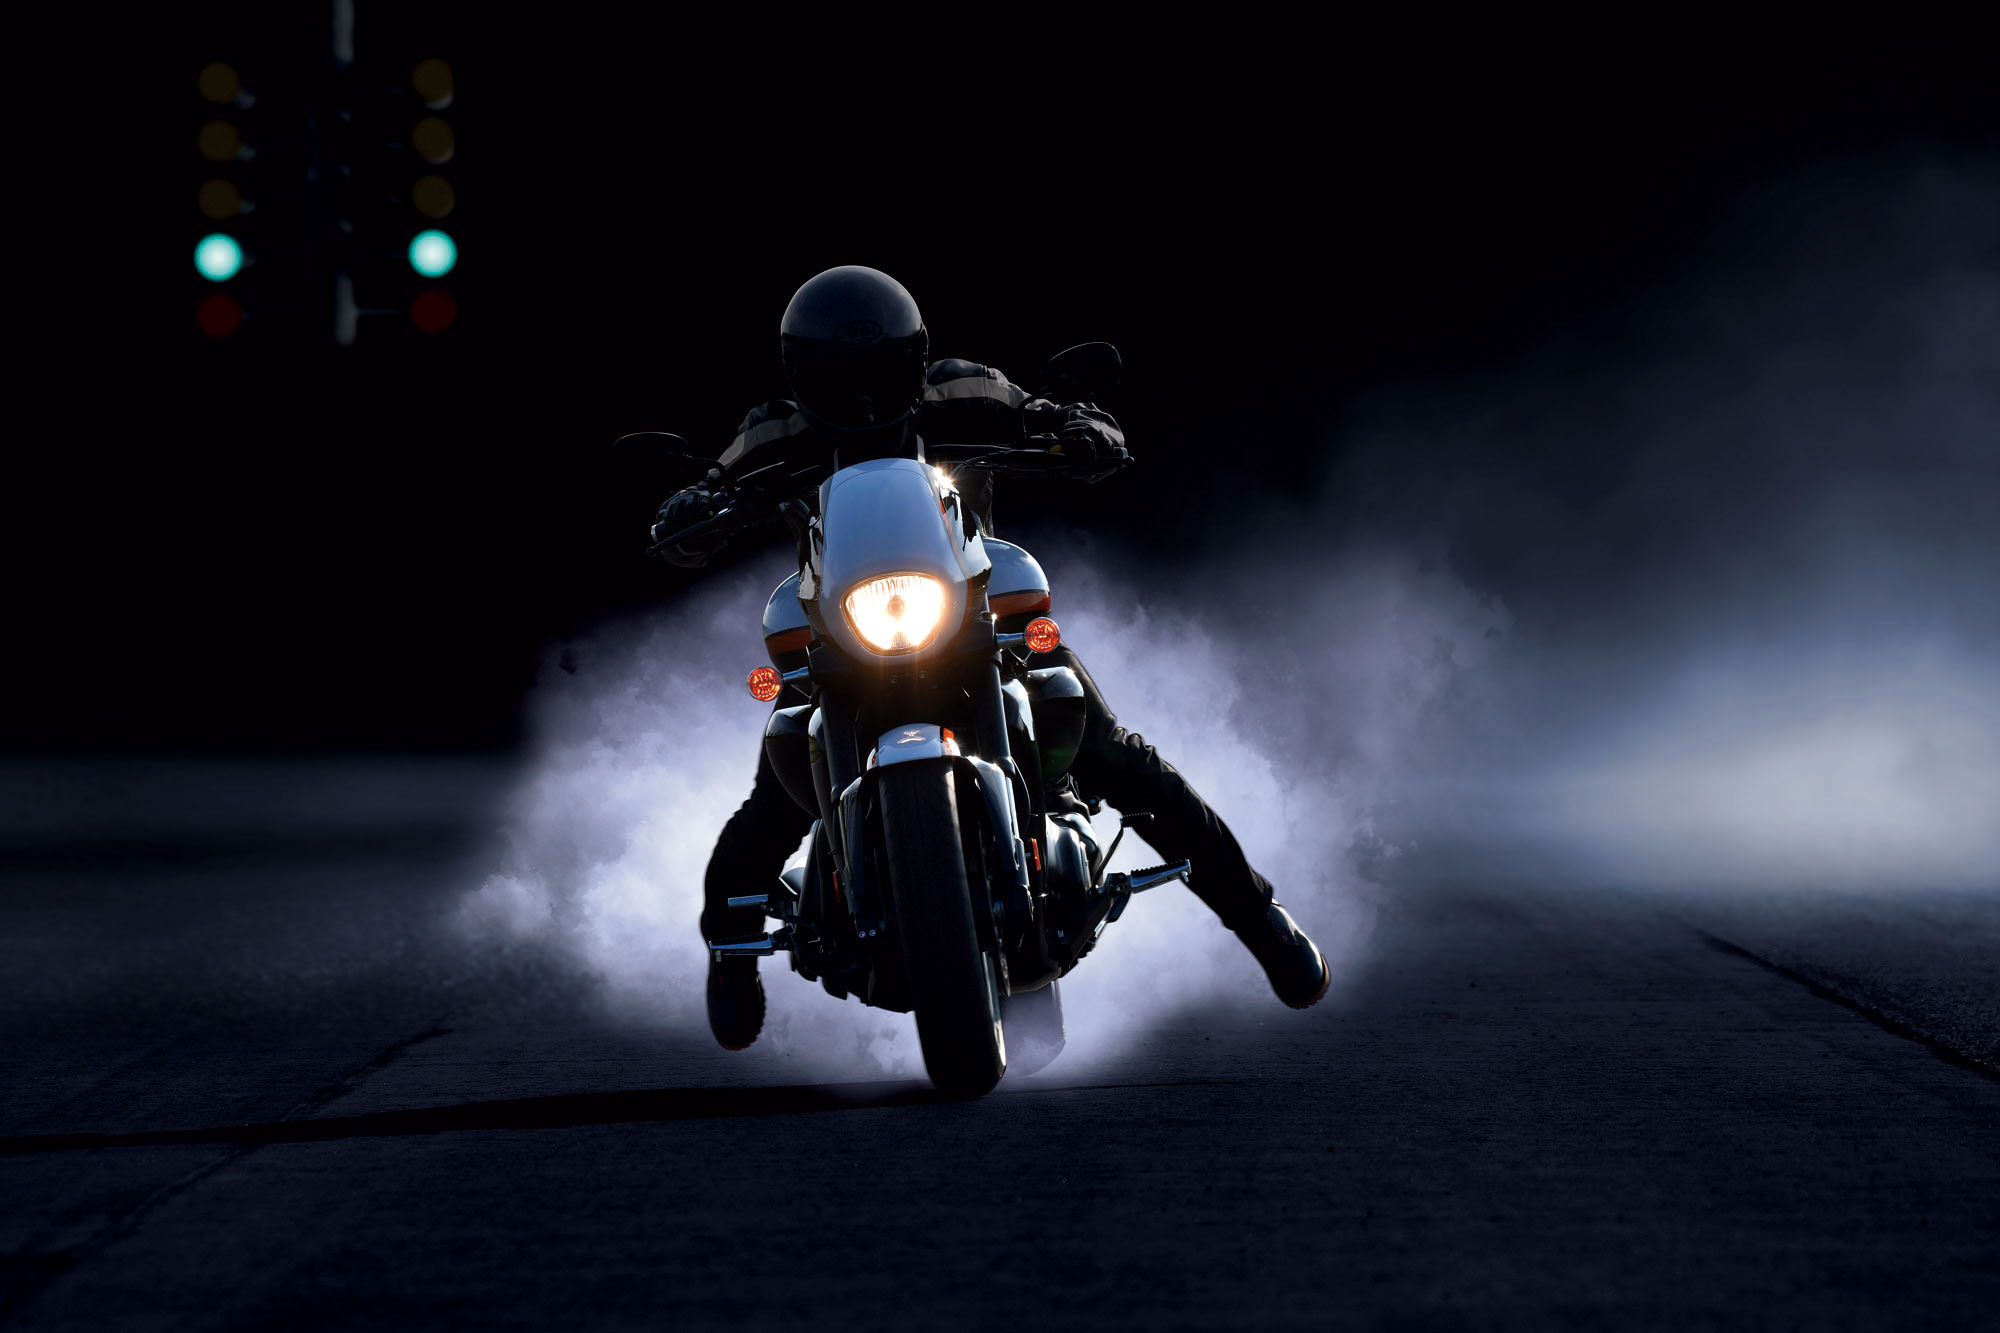 2021 Suzuki Boulevard M109R Guide • Total Motorcycle